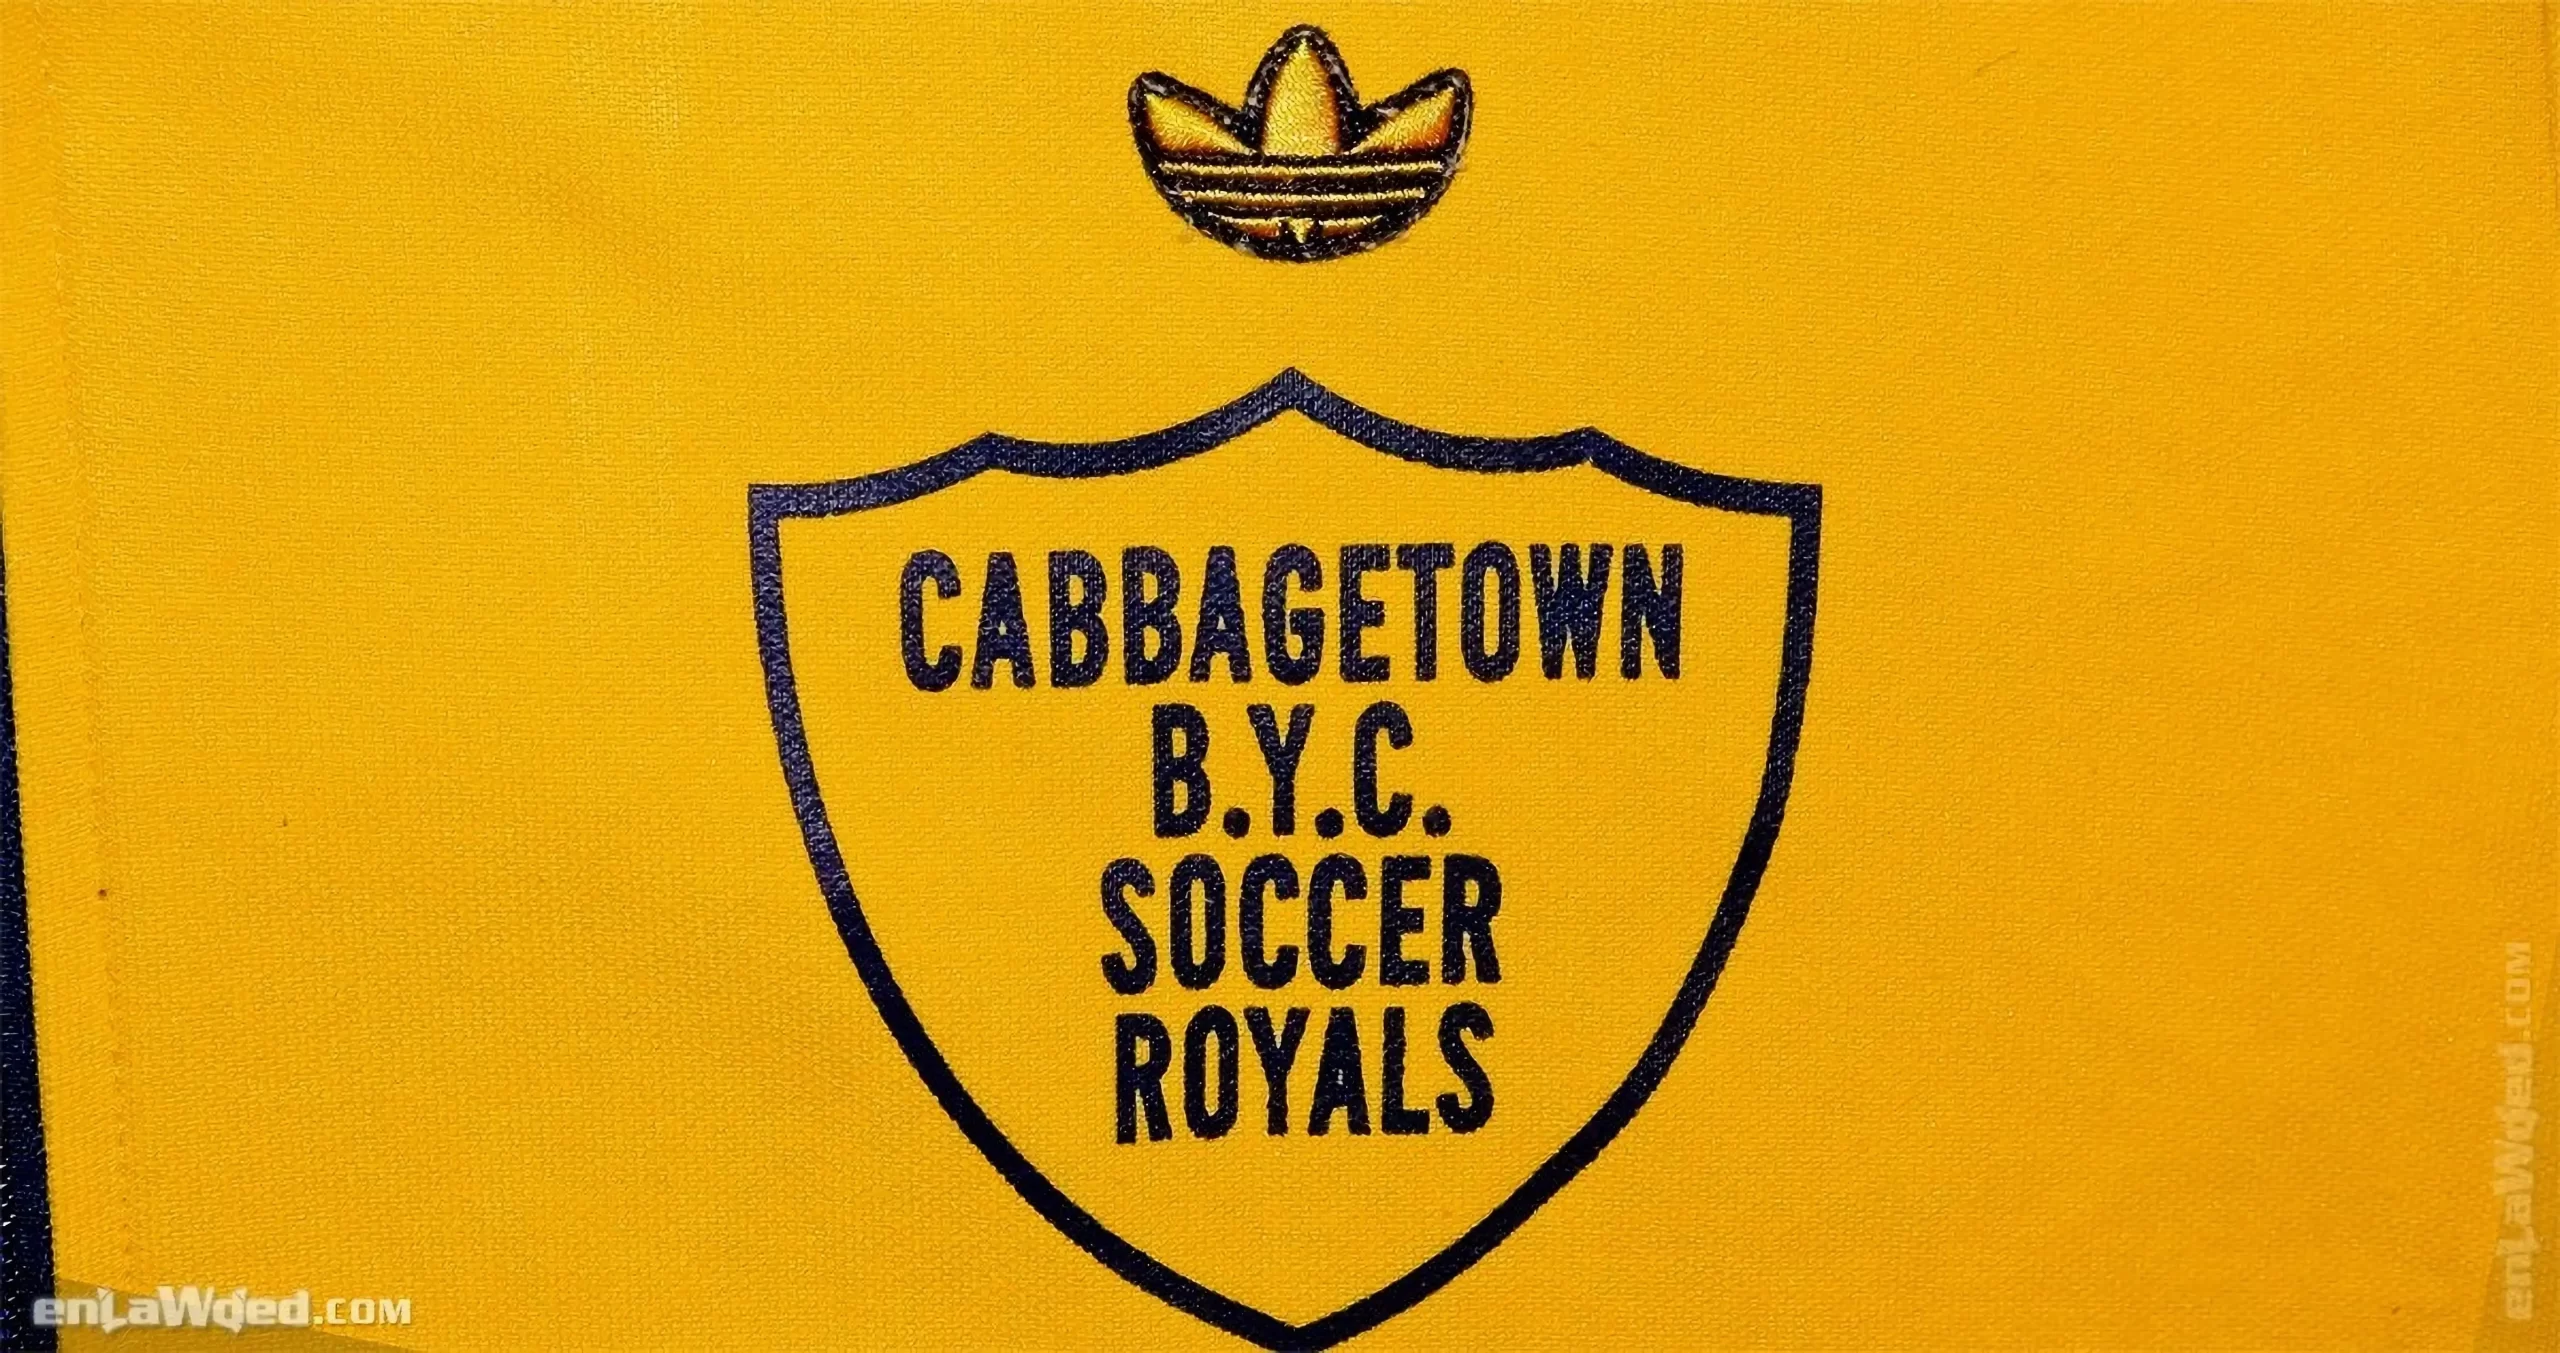 Men’s 2004 Cabbagetown Royals TT by Adidas Originals: Exclusive (EnLawded.com file #lmcgek4ldufsr55nn8l)